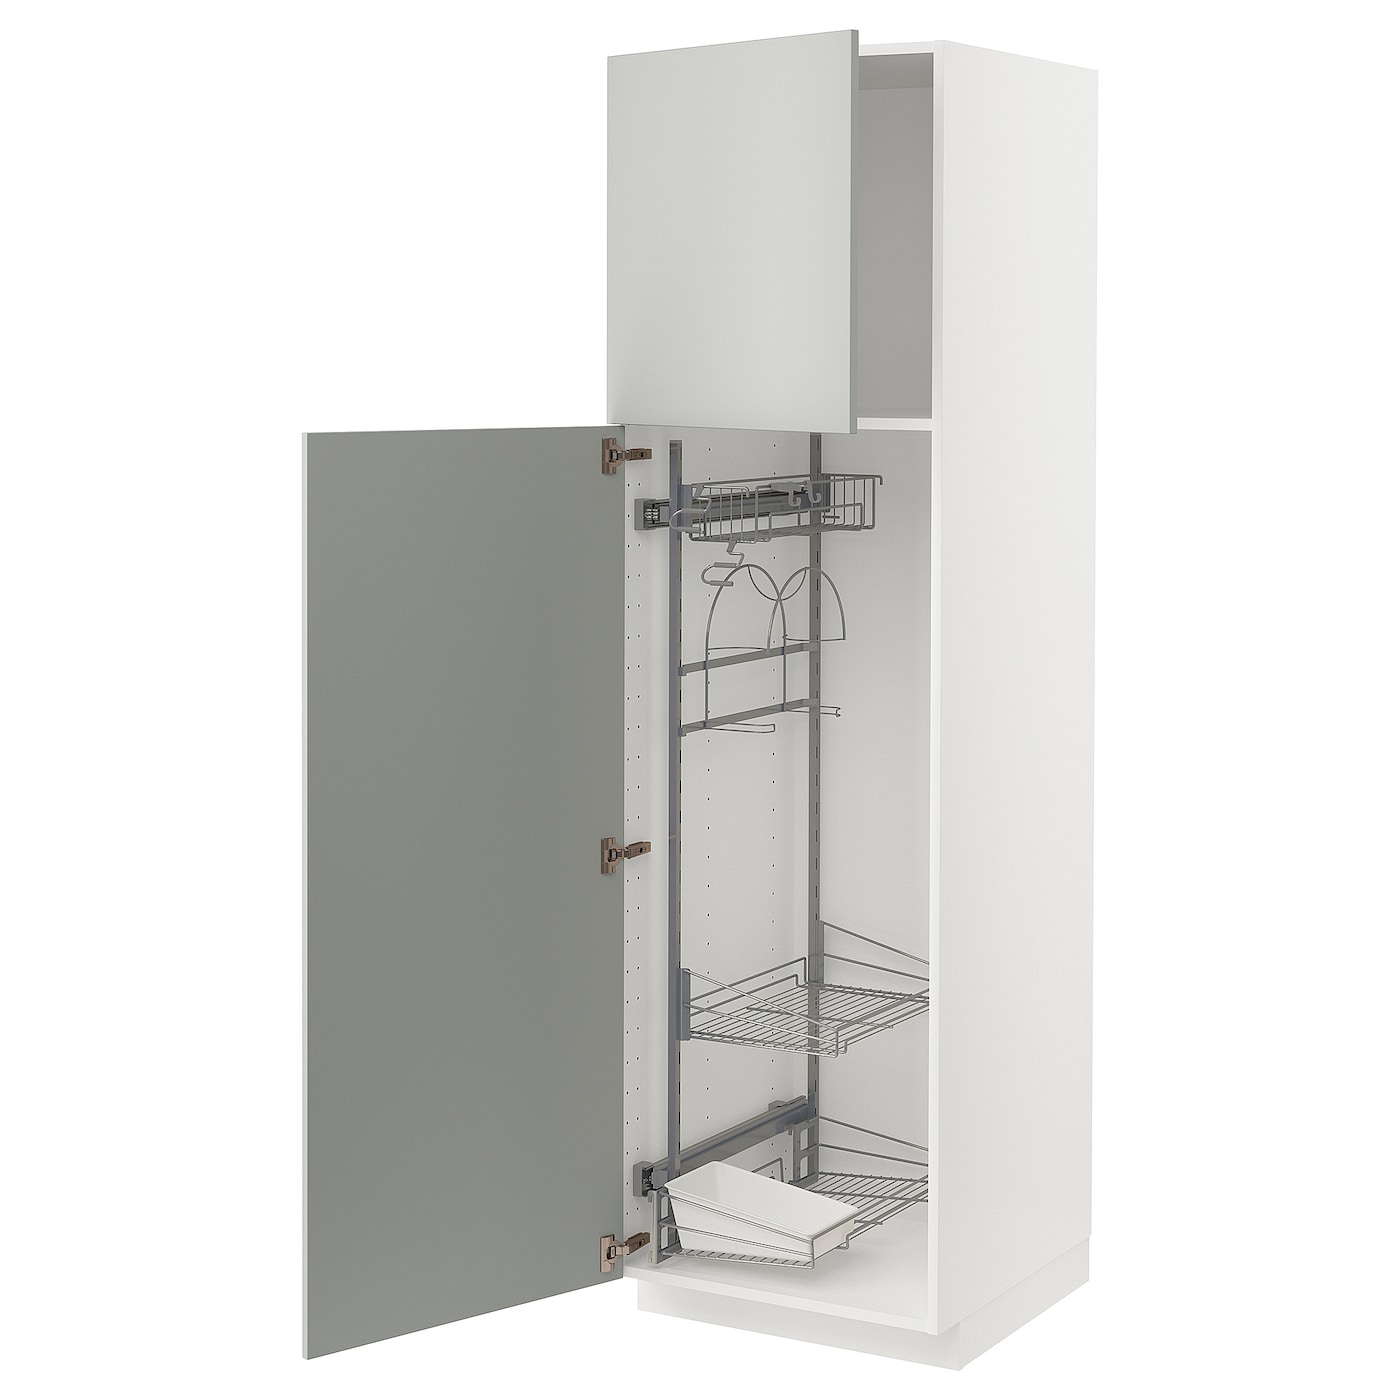 Высокий кухонный шкаф/бытовой - IKEA METOD/МЕТОД ИКЕА, 200х60х60 см, белый/серый